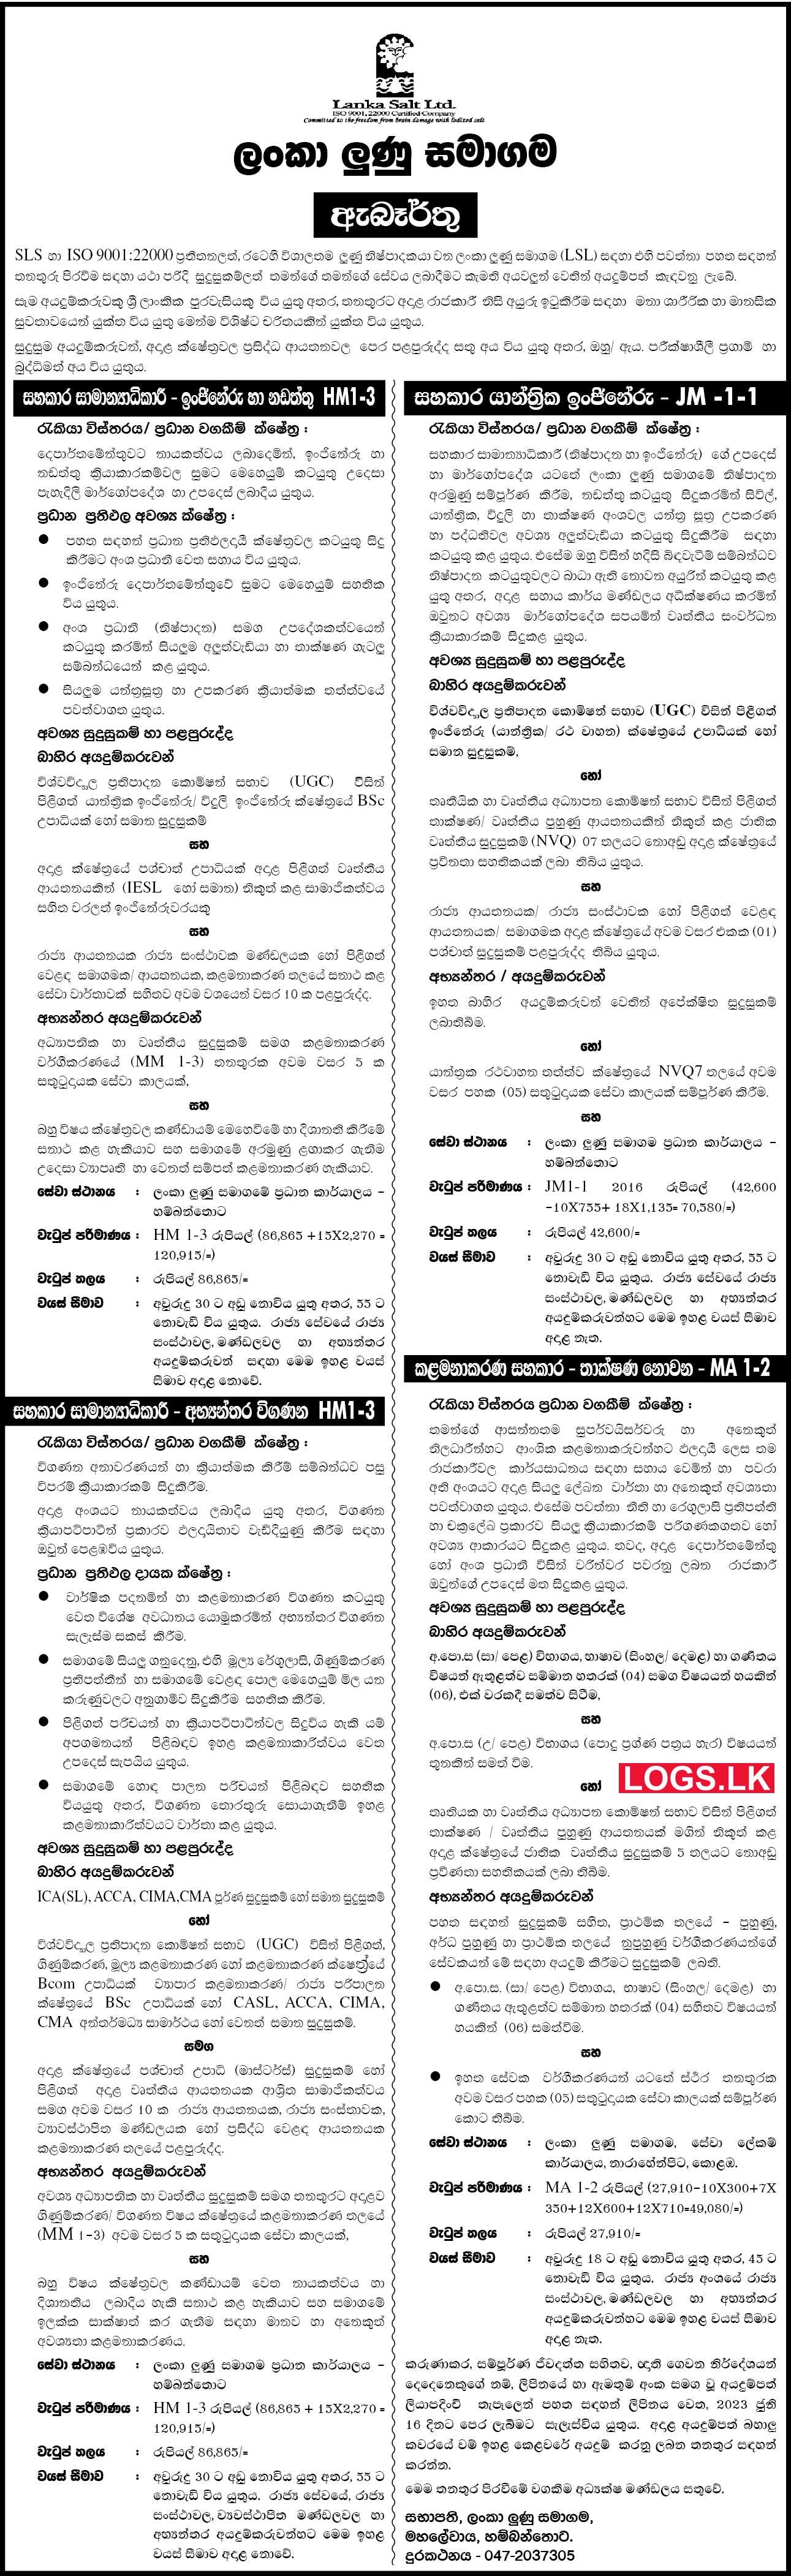 Lanka Salt Limited Job Vacancies 2023 Application Form, Details Download